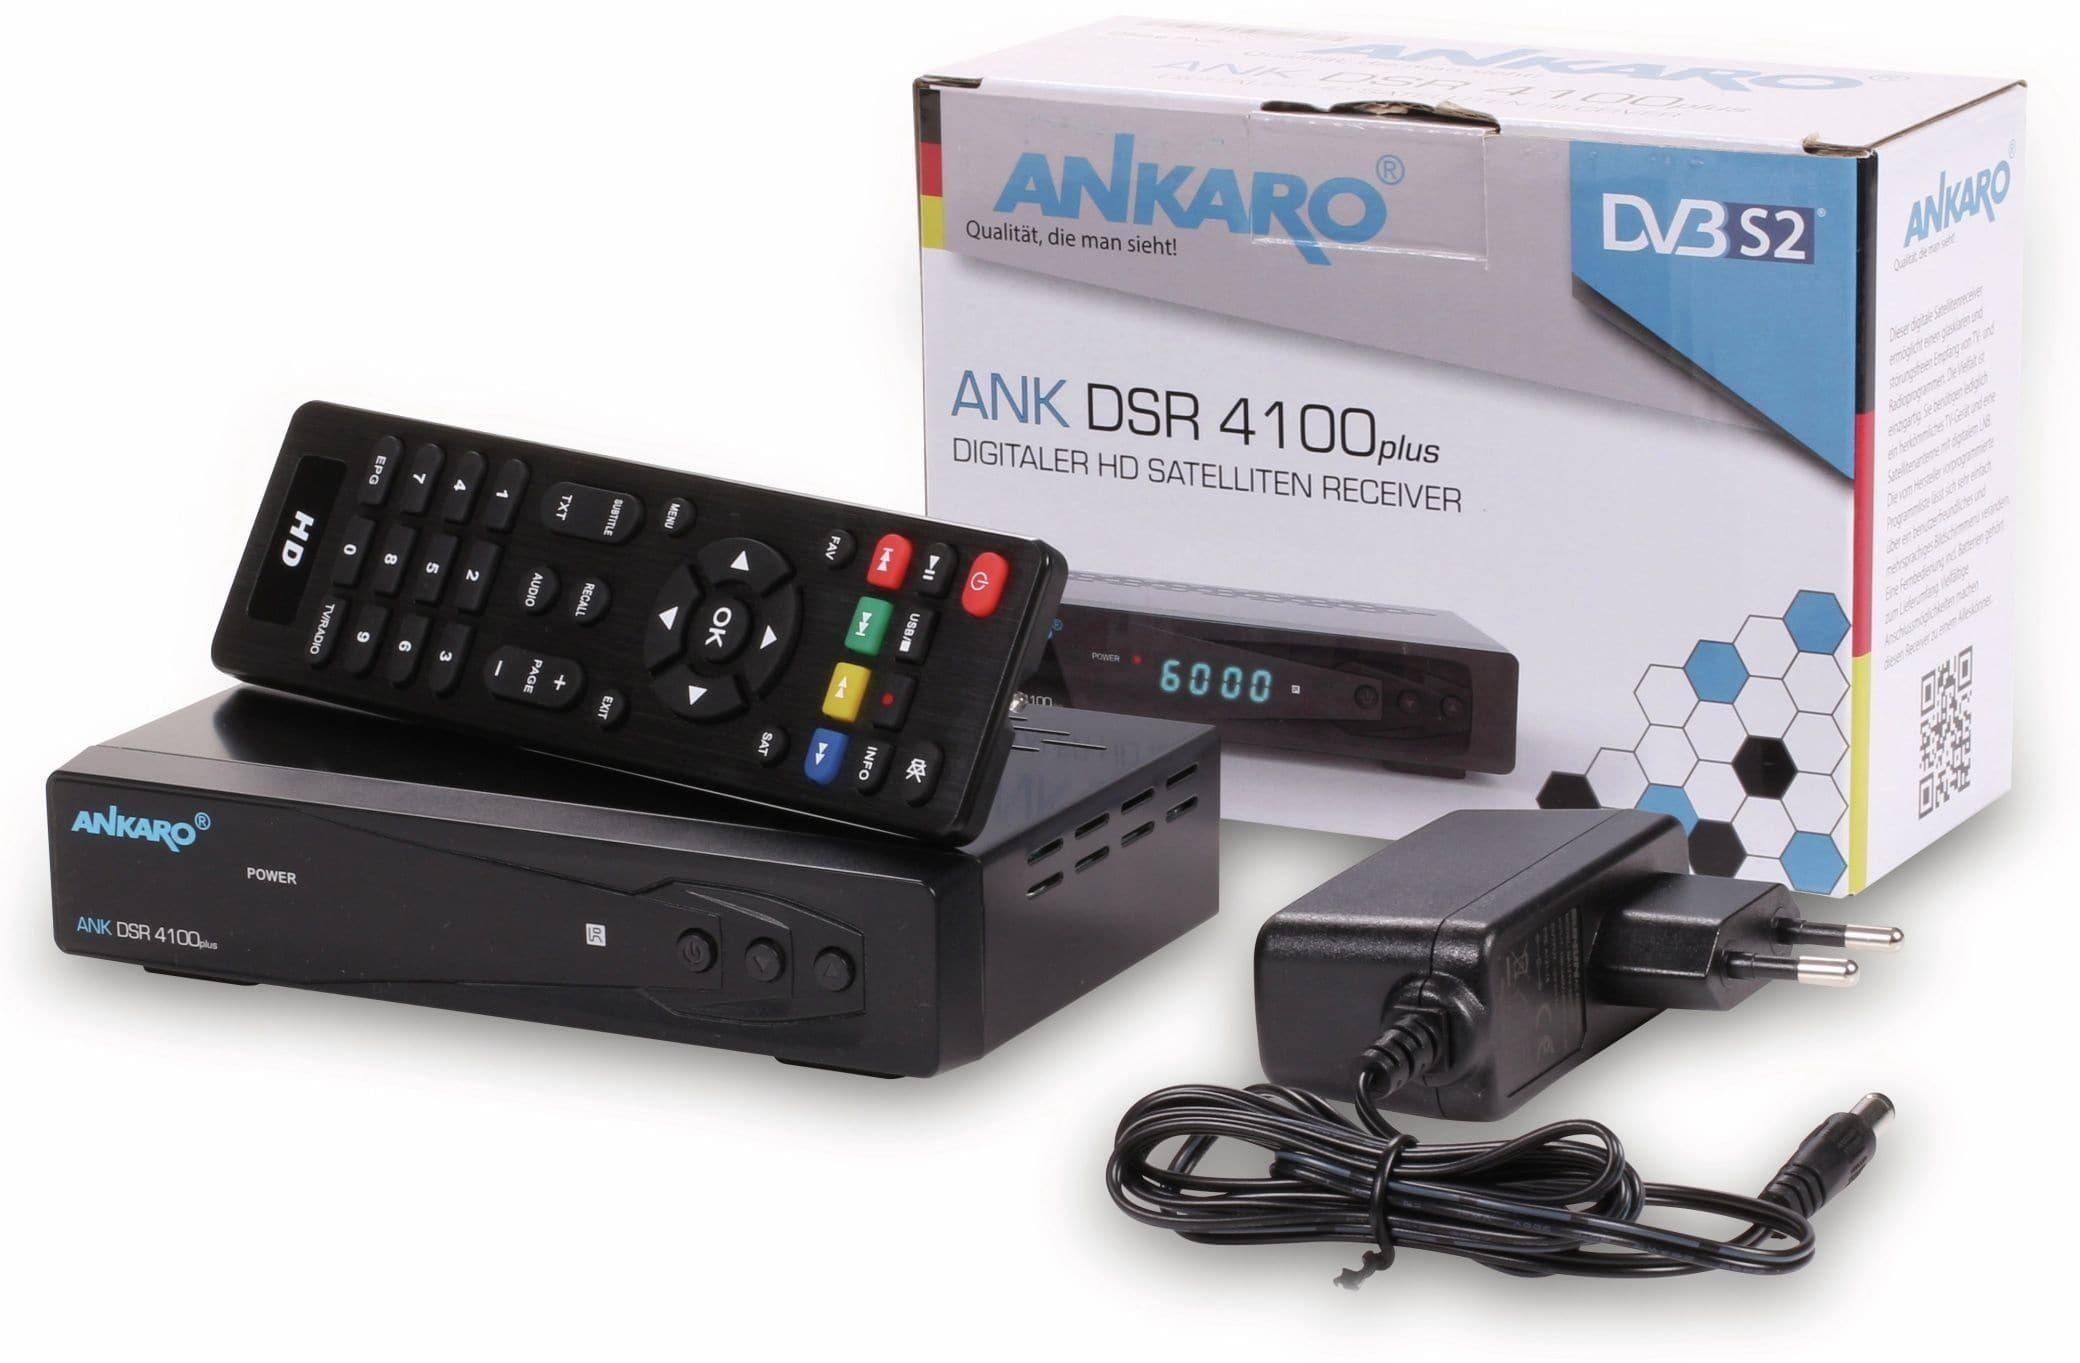 Ankaro ANKARO DVB-S 4100plus, Satellitenreceiver PVR DSR HDTV-Receiver